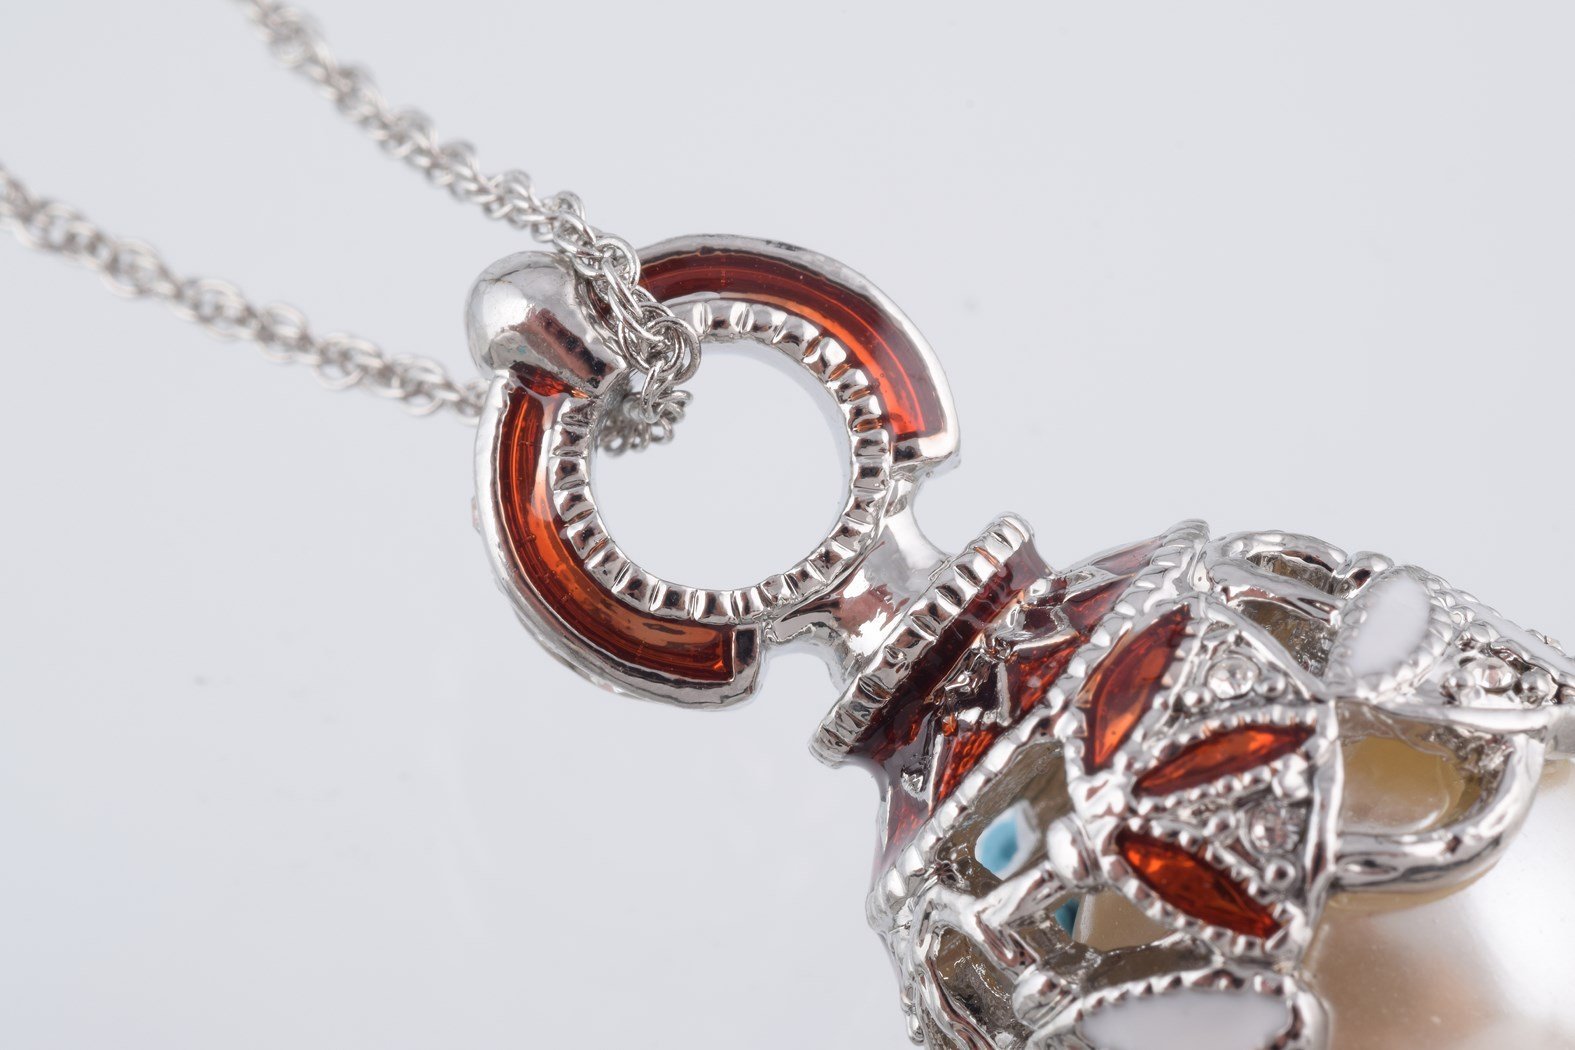 Keren Kopal Silver & Red Pearl Egg Pendant Necklace  39.00